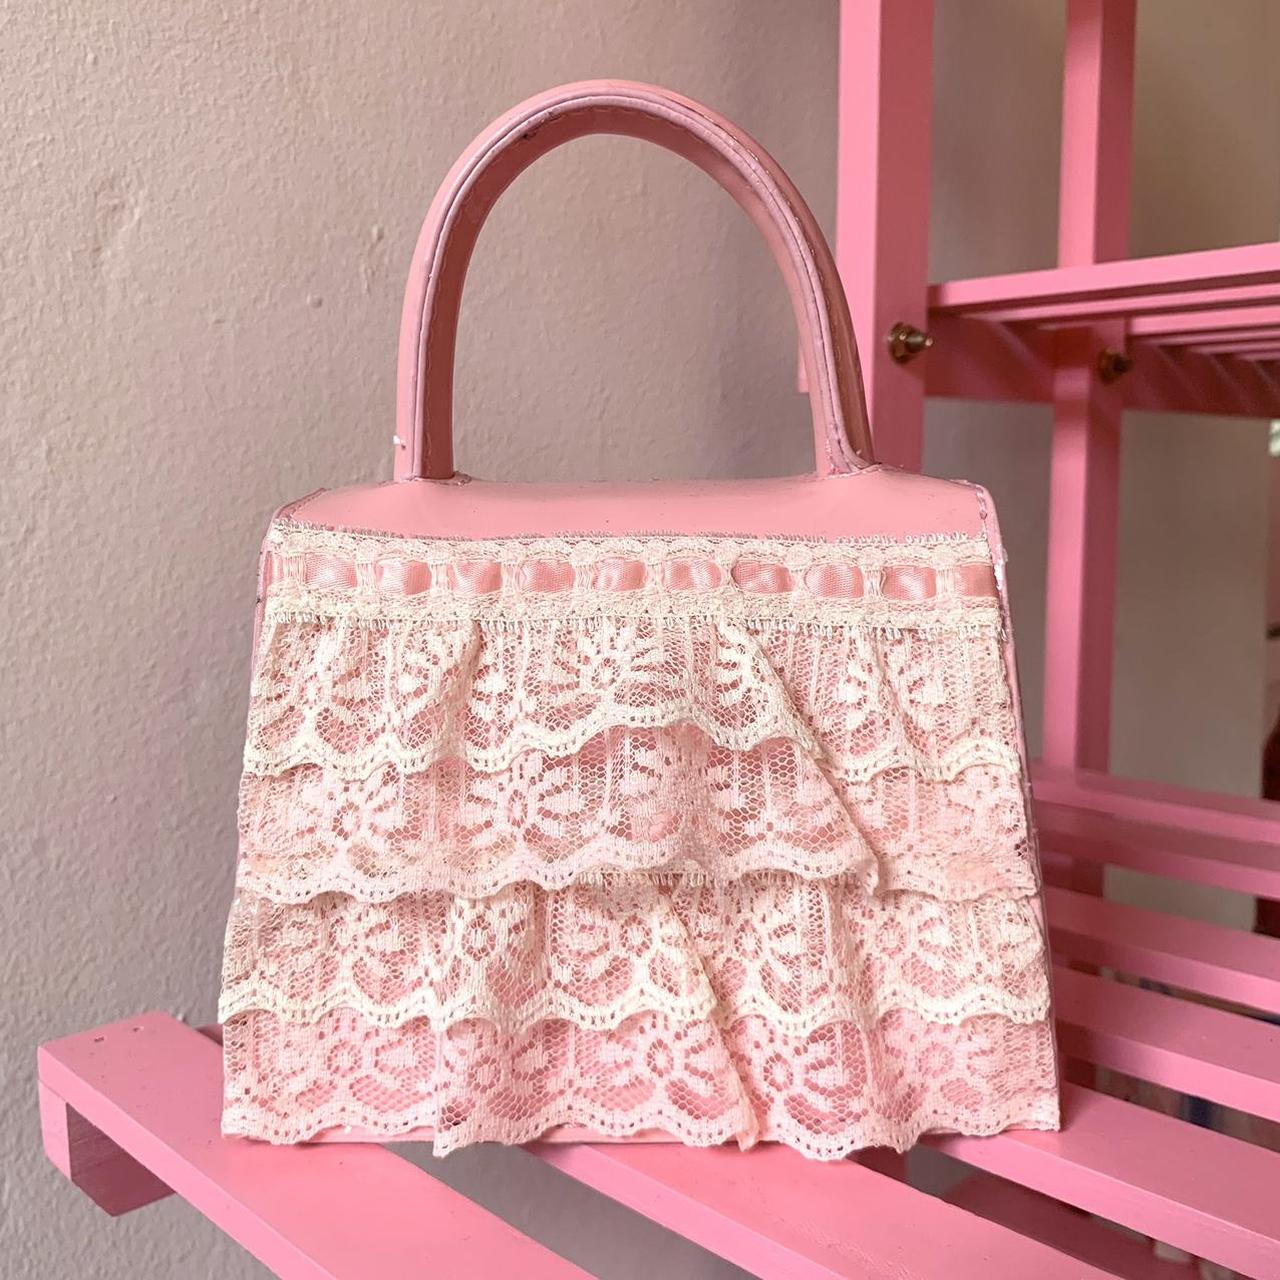 Sugarpill Women's Pink and White Bag (3)